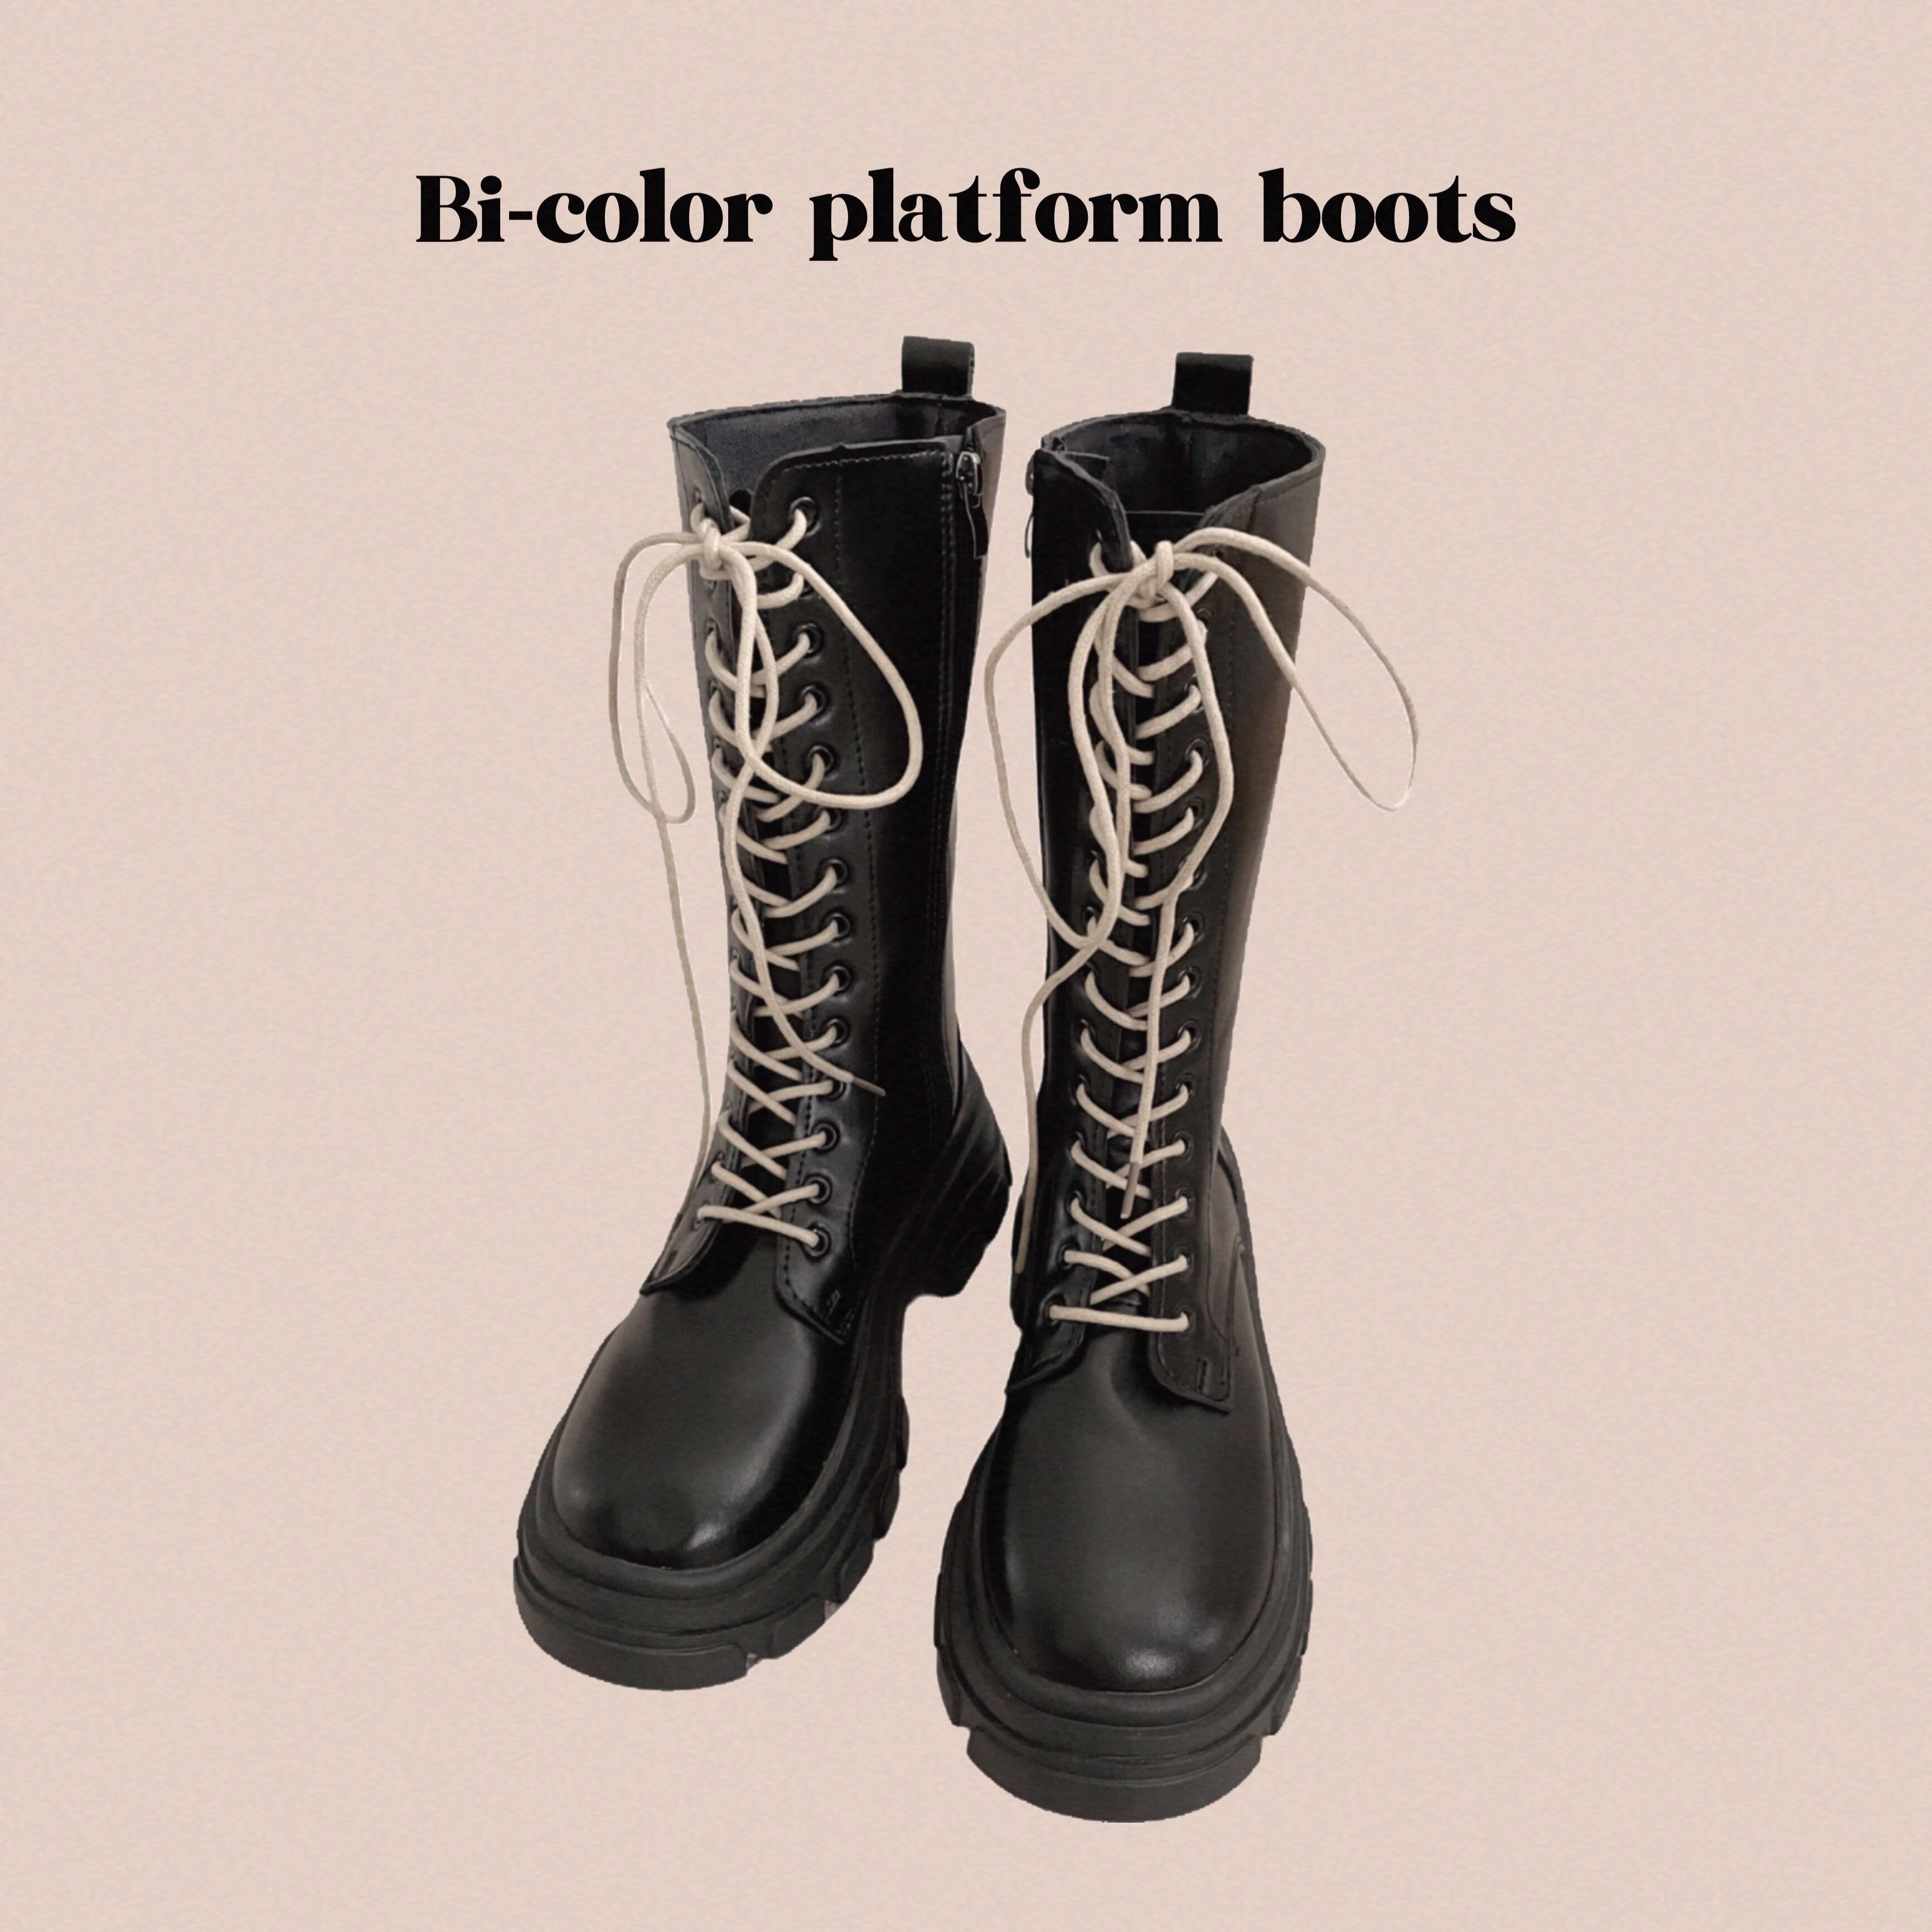 bi-color platform boots